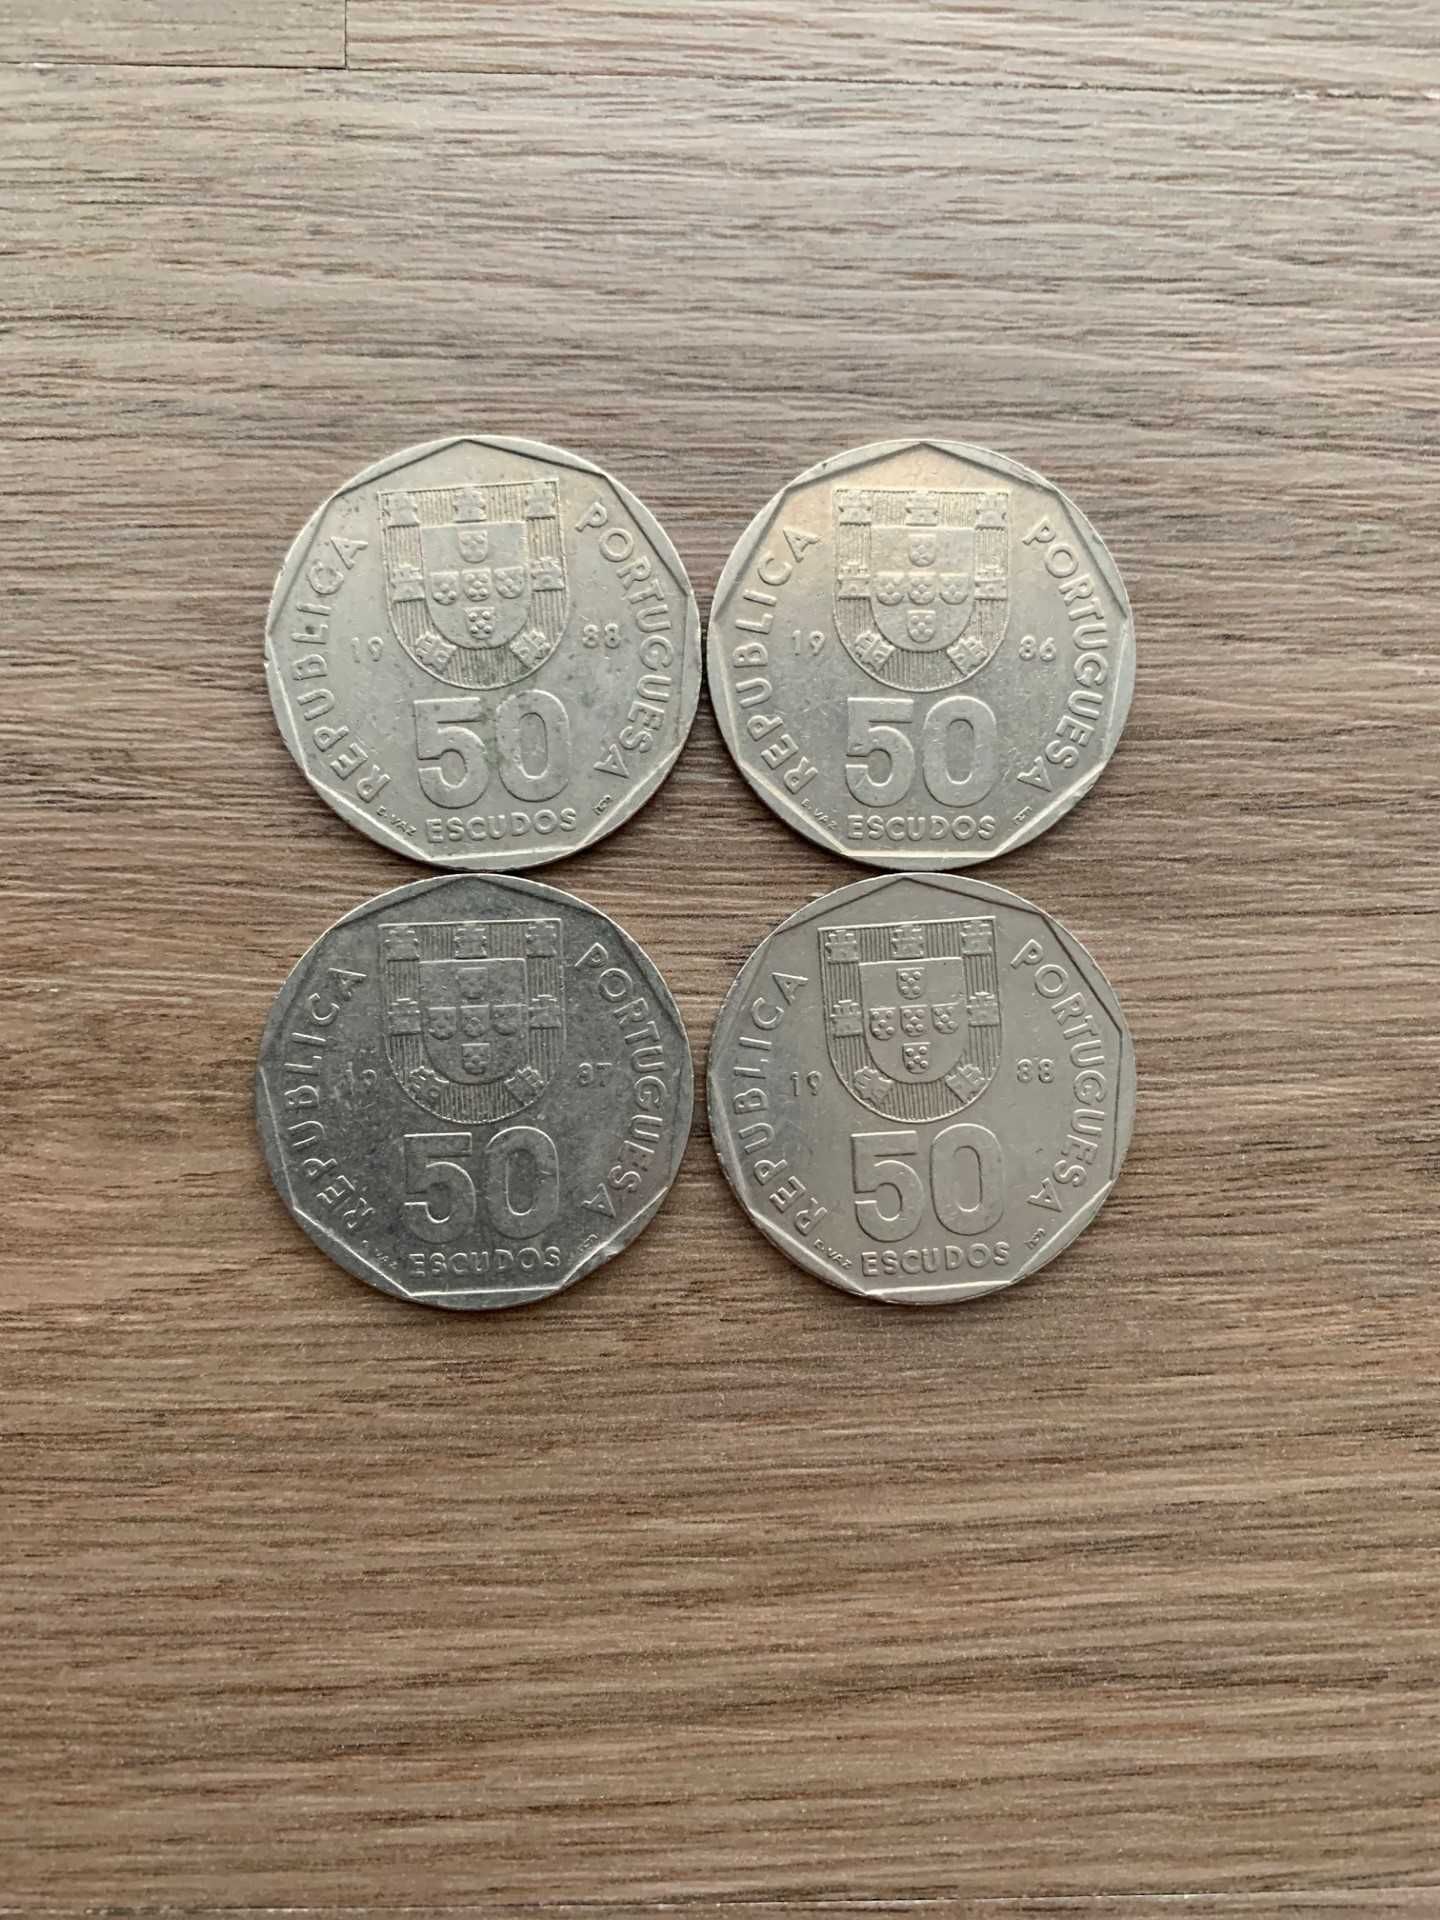 4 moedas 50 escudos - 1 de 1986, 1 de 1987 e 2 de 1988